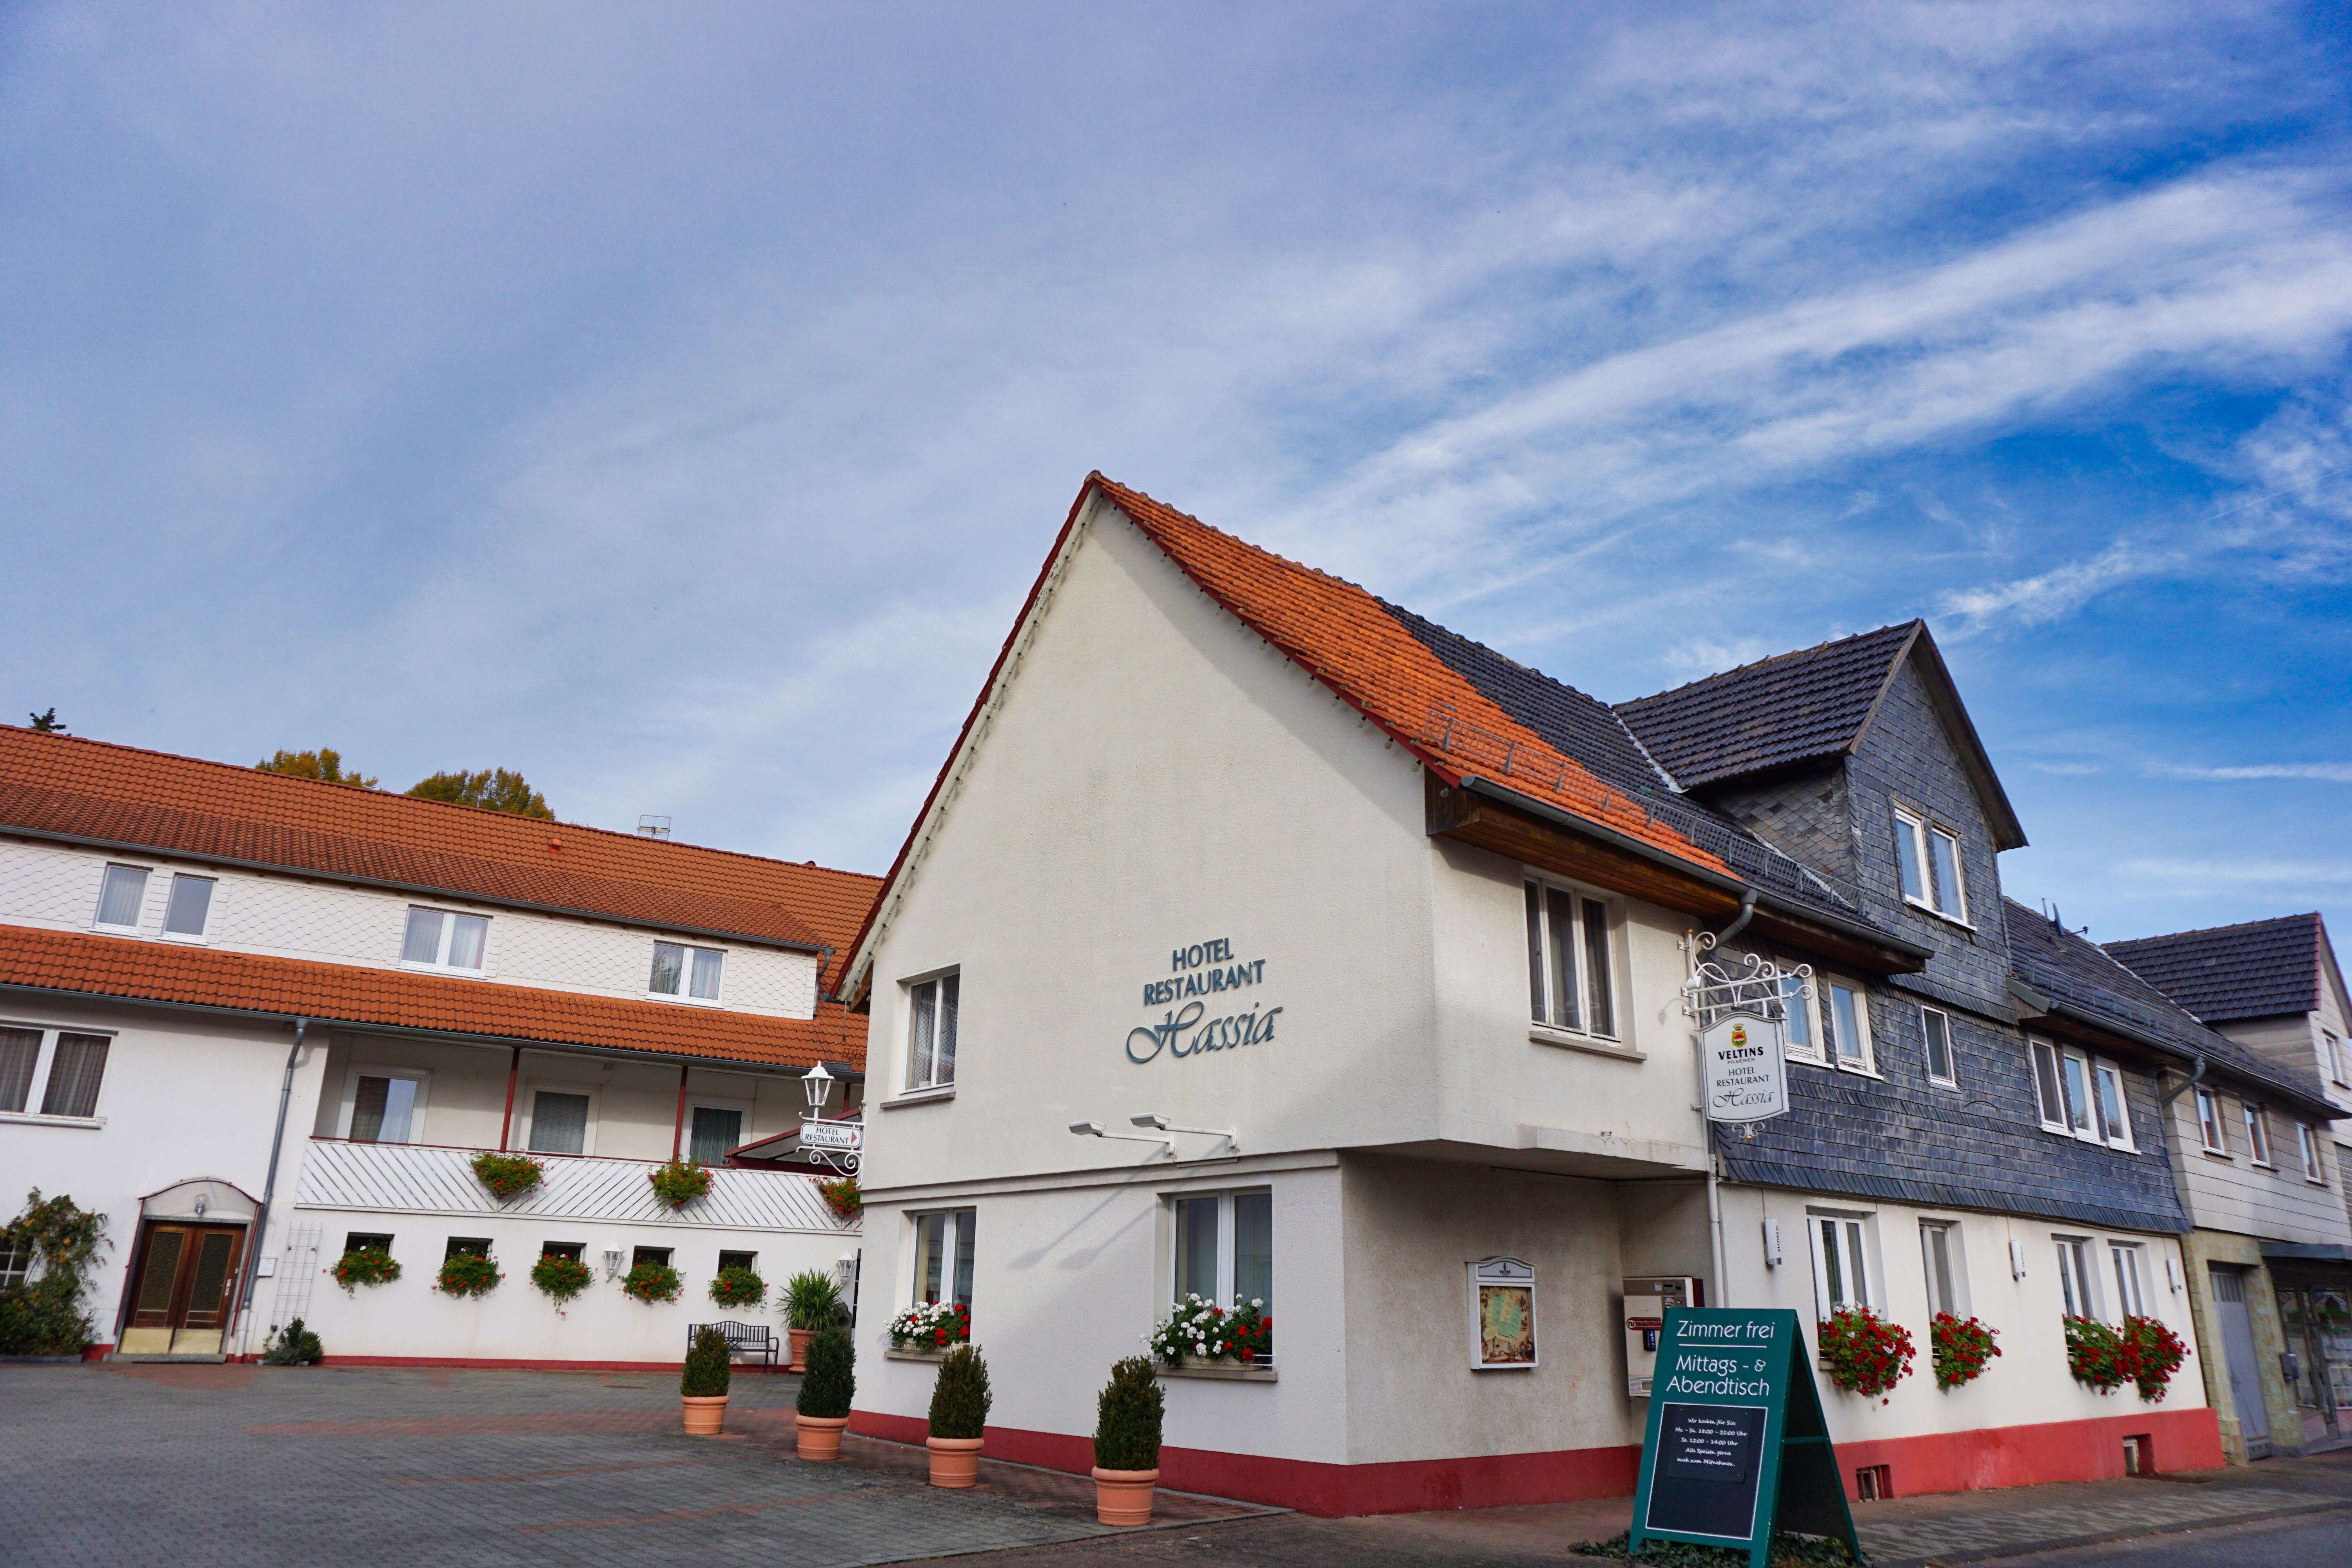 Hotel-Restaurant Hassia, Frielendorf.
